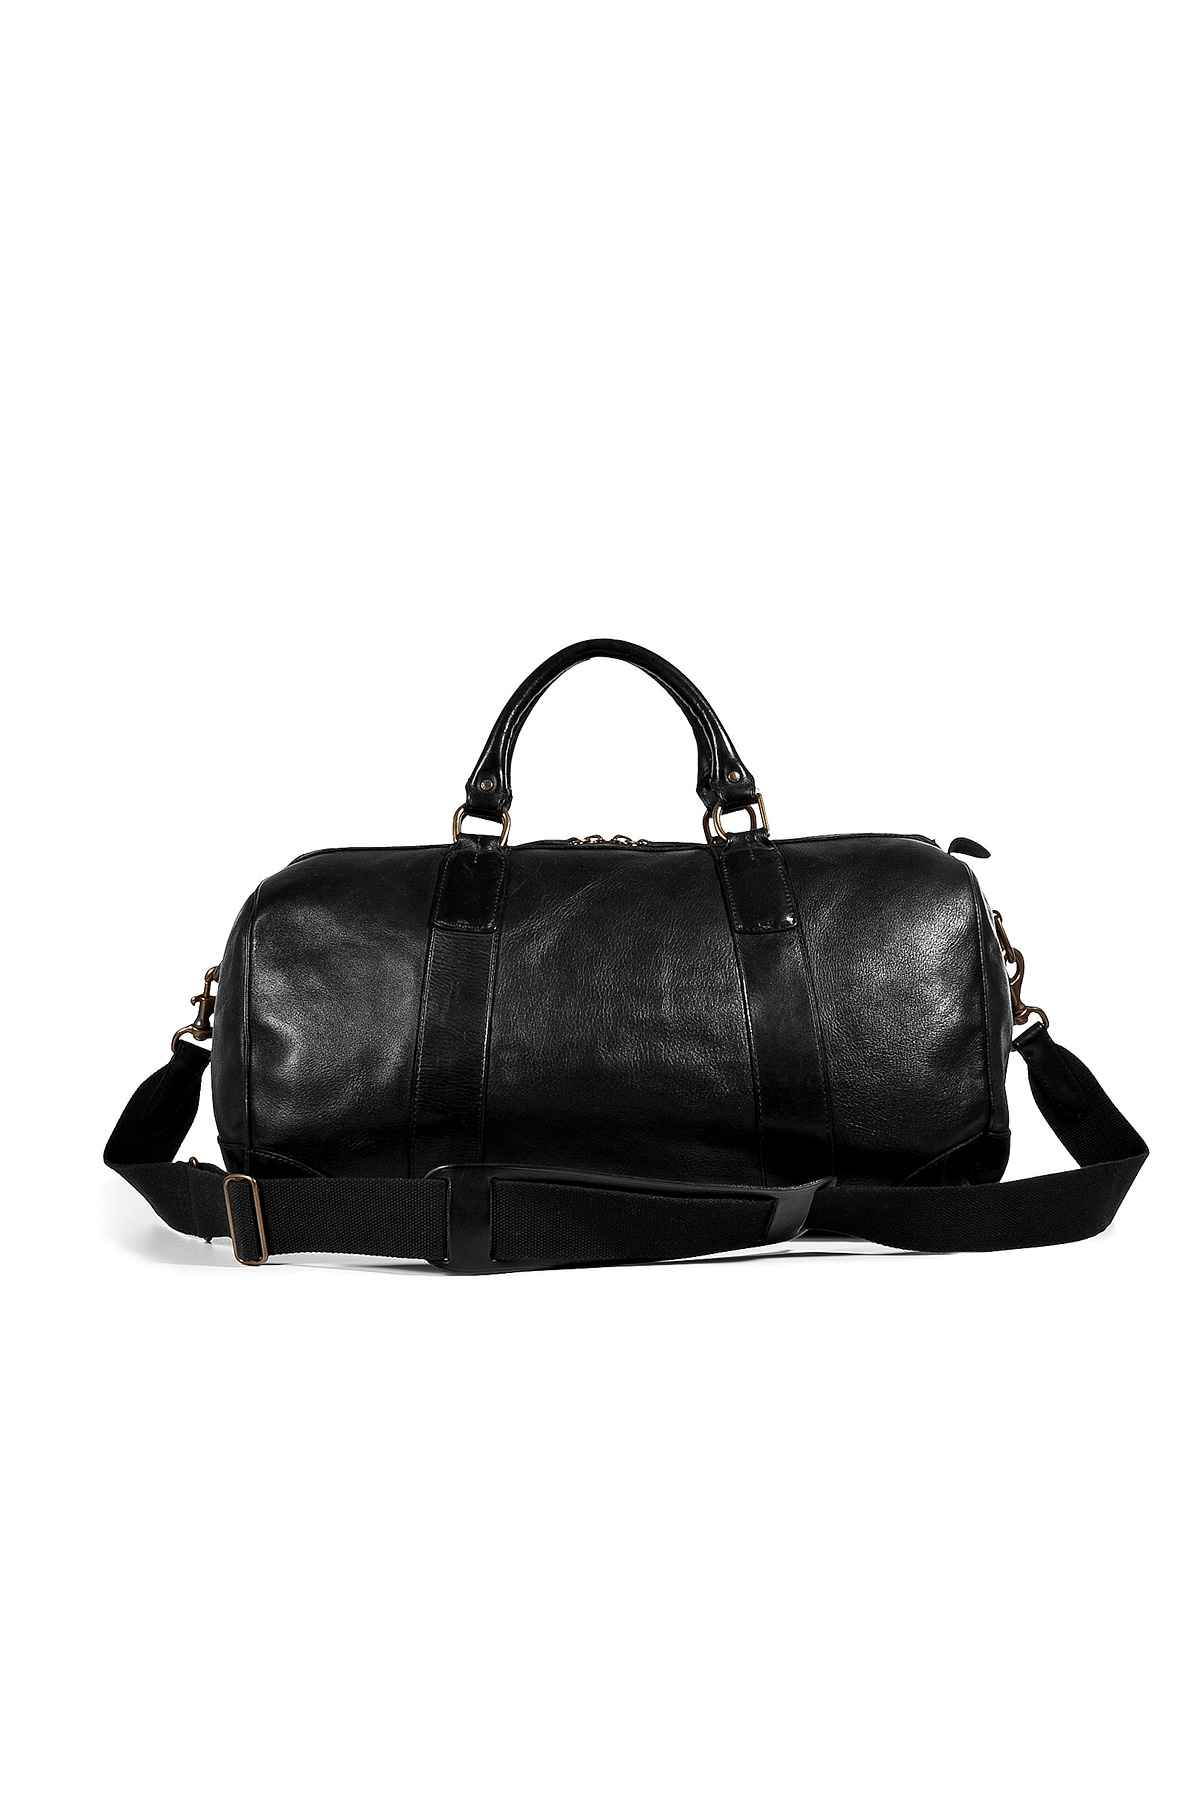 Lyst - Ralph Lauren Blue Label Leather Overnight Duffle Bag in Black ...